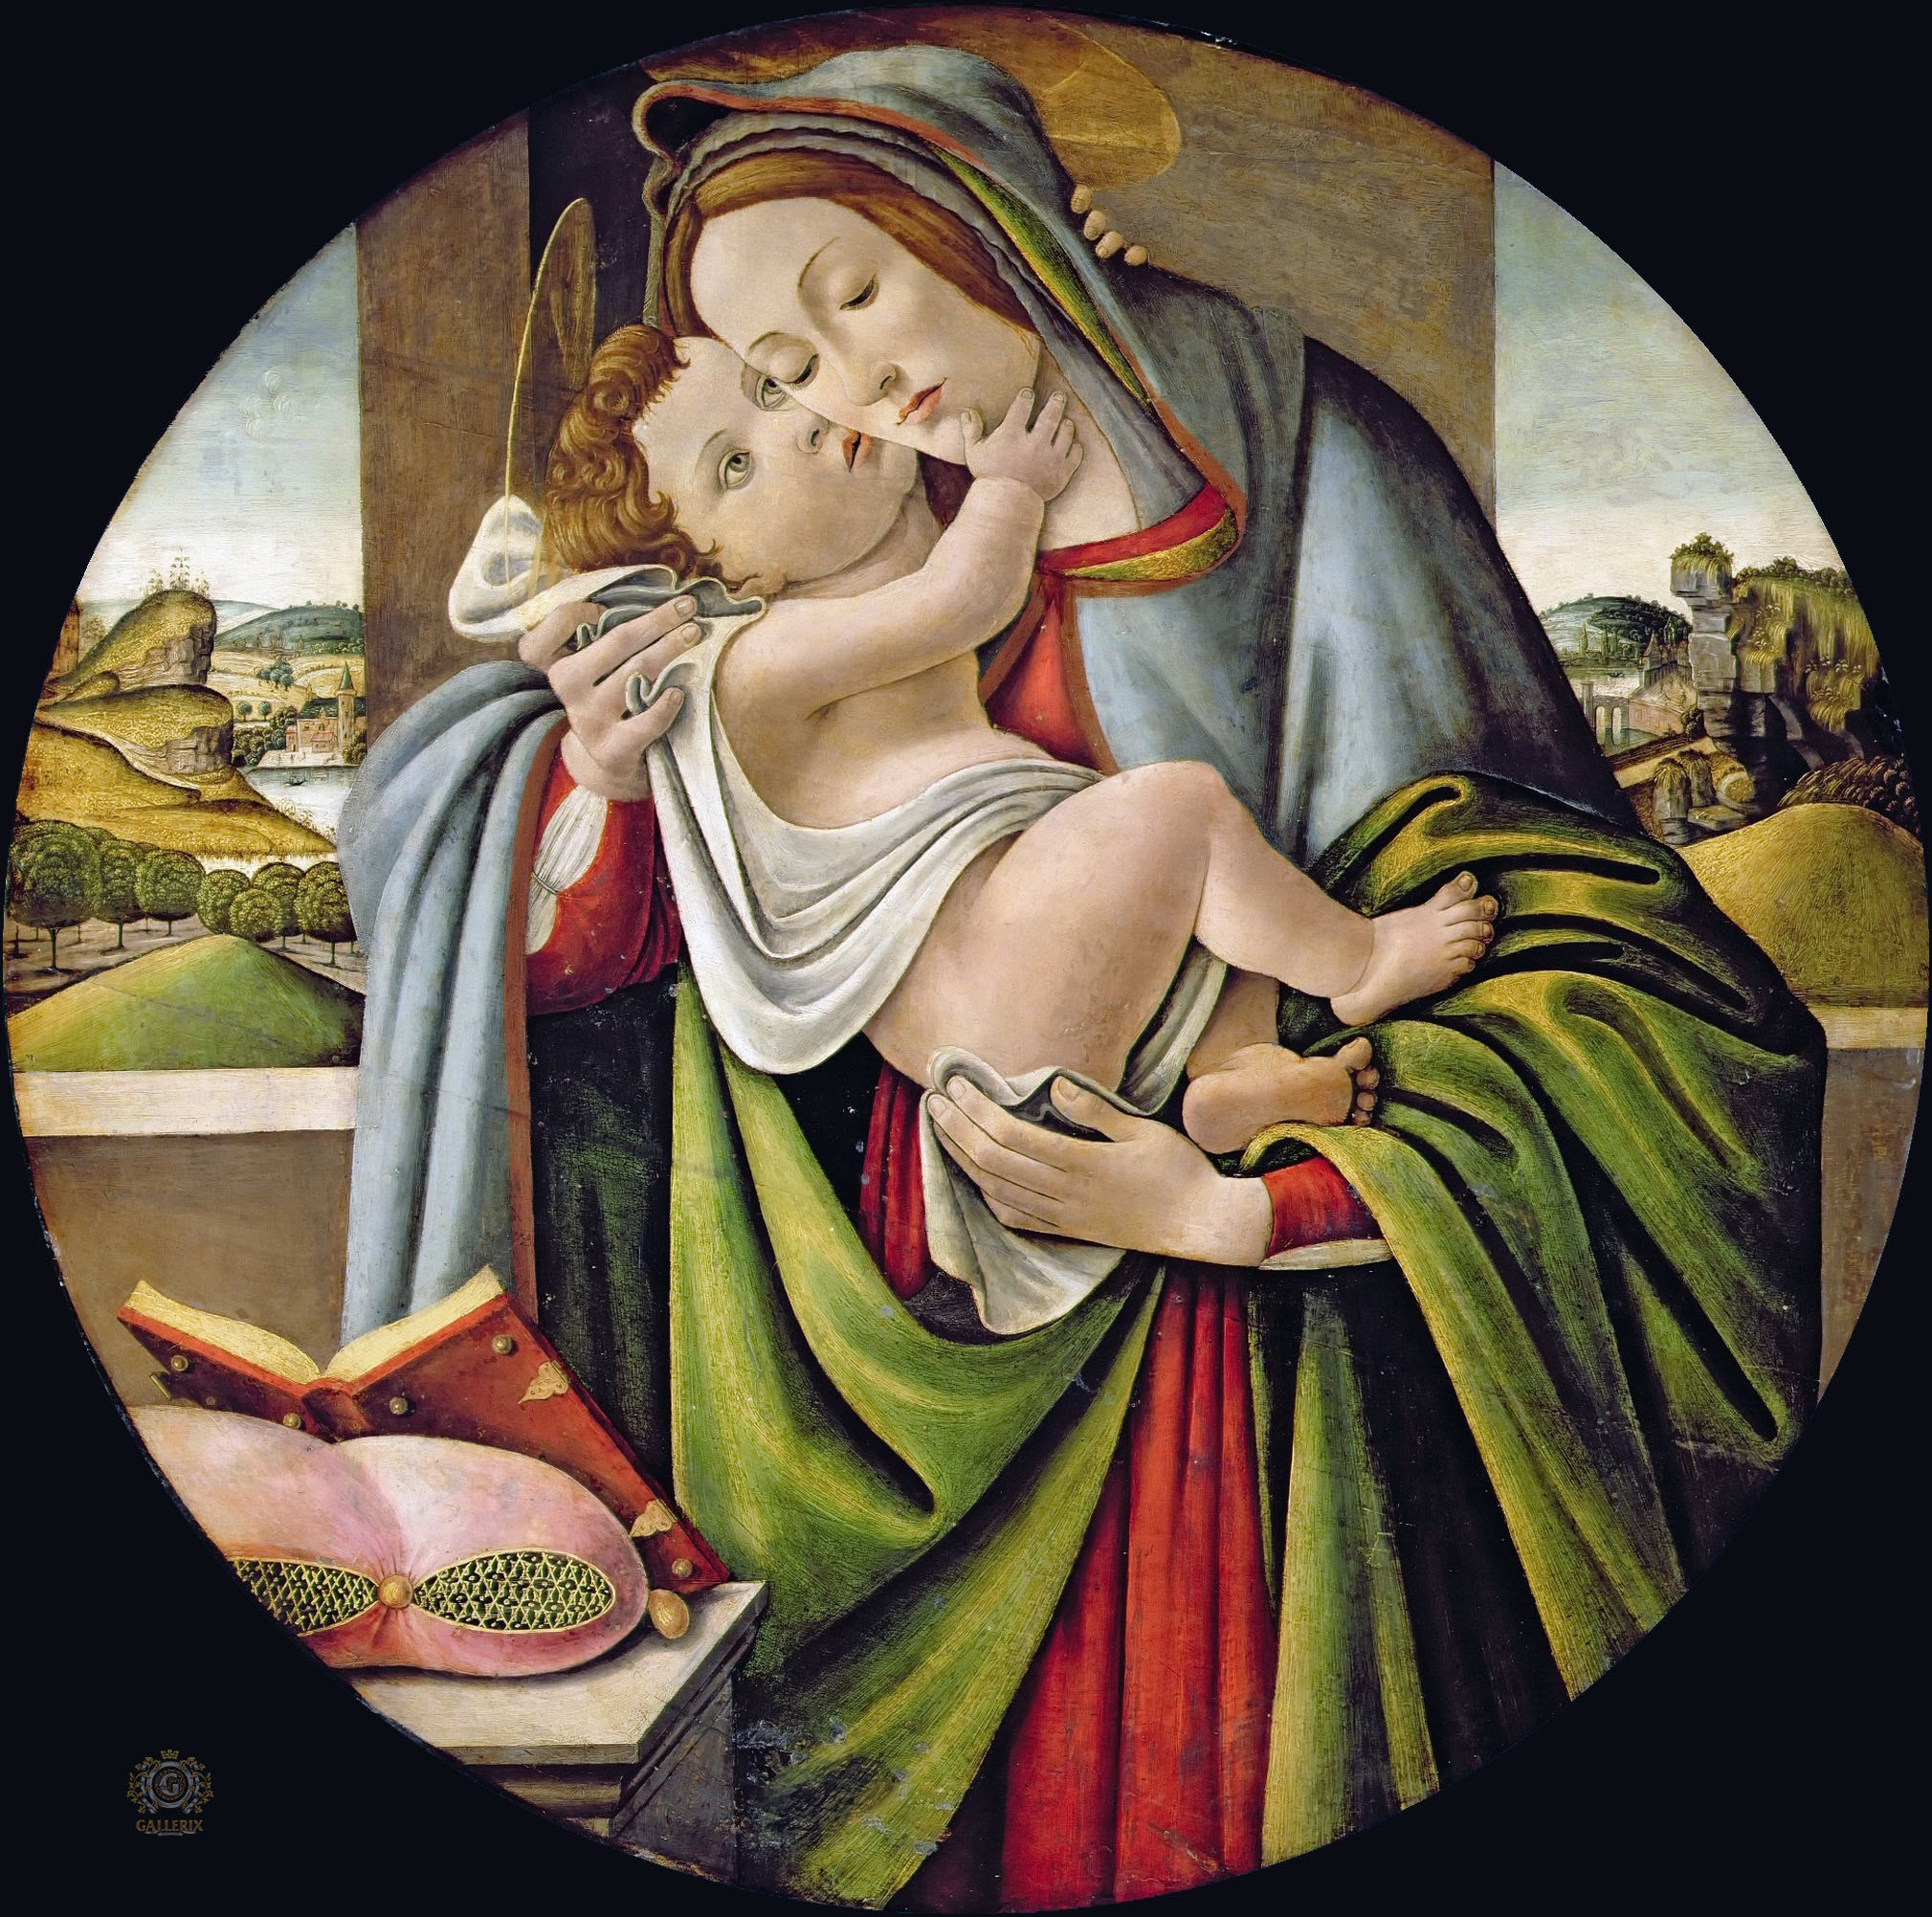 Сандро Боттичелли, мастерская. "Мадонна с Младенцем". Музей Фицуильяма, Кембридж.